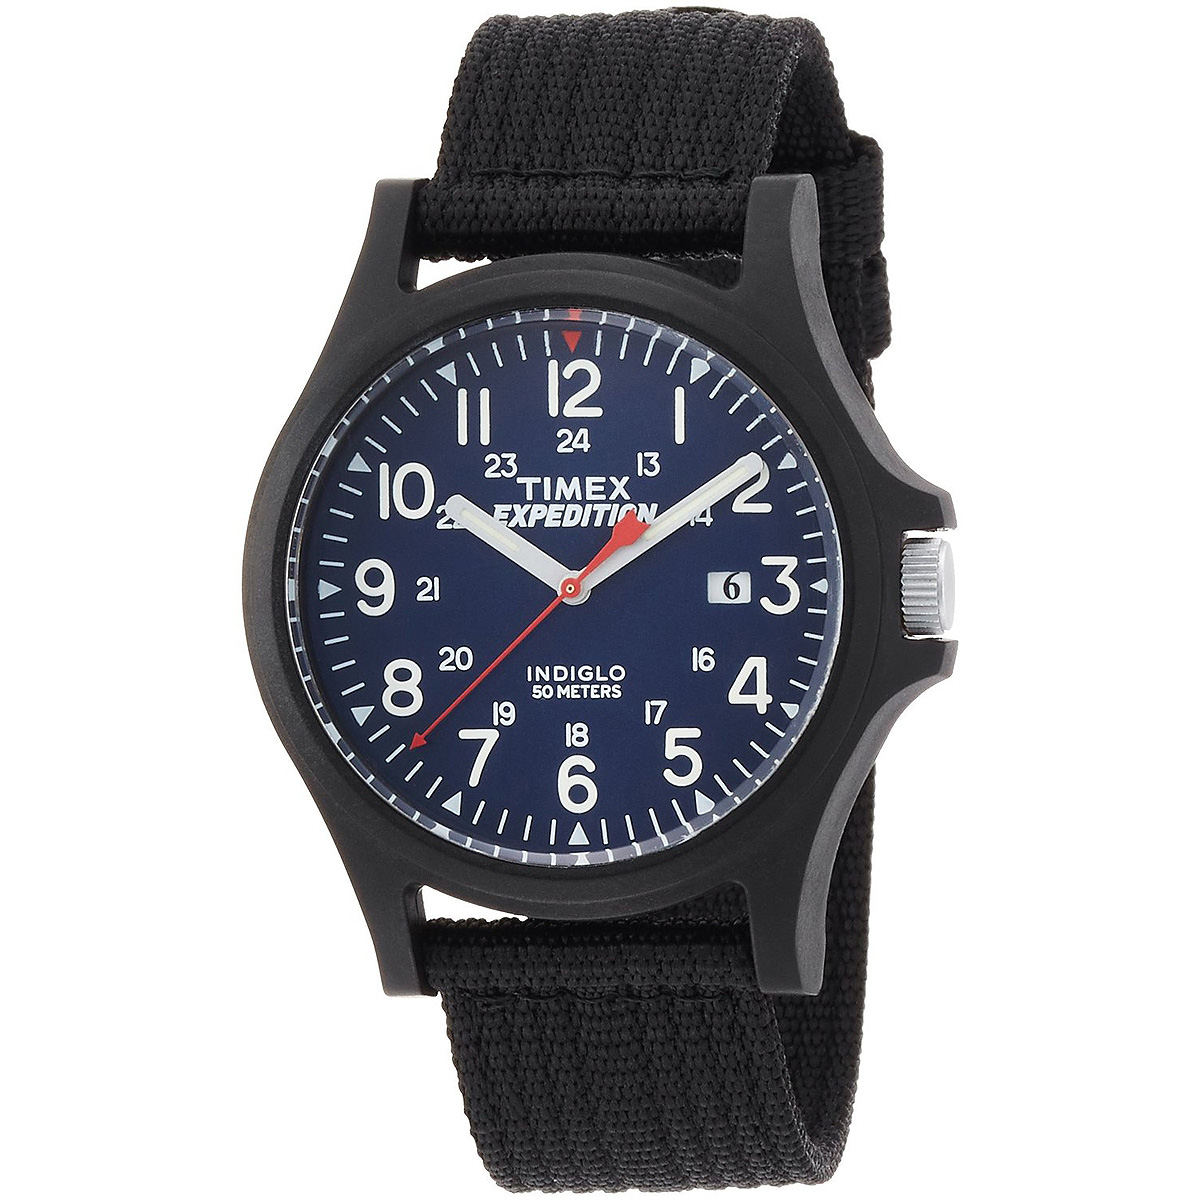 Наручные часы мужские Timex, цвет: черный. TW4999900